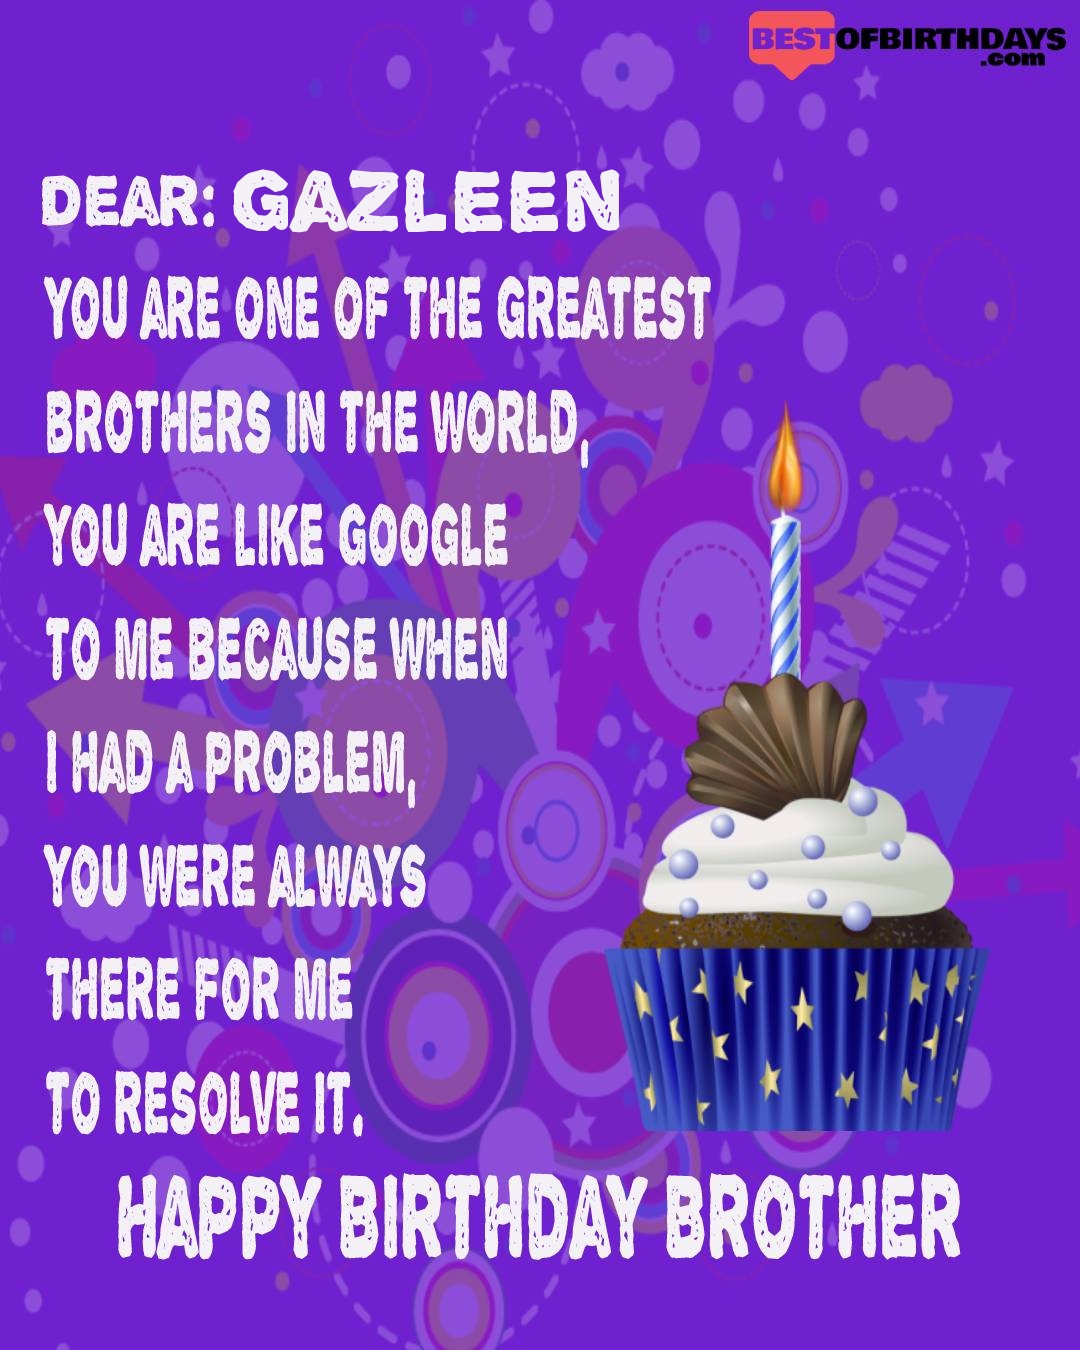 Happy birthday gazleen bhai brother bro